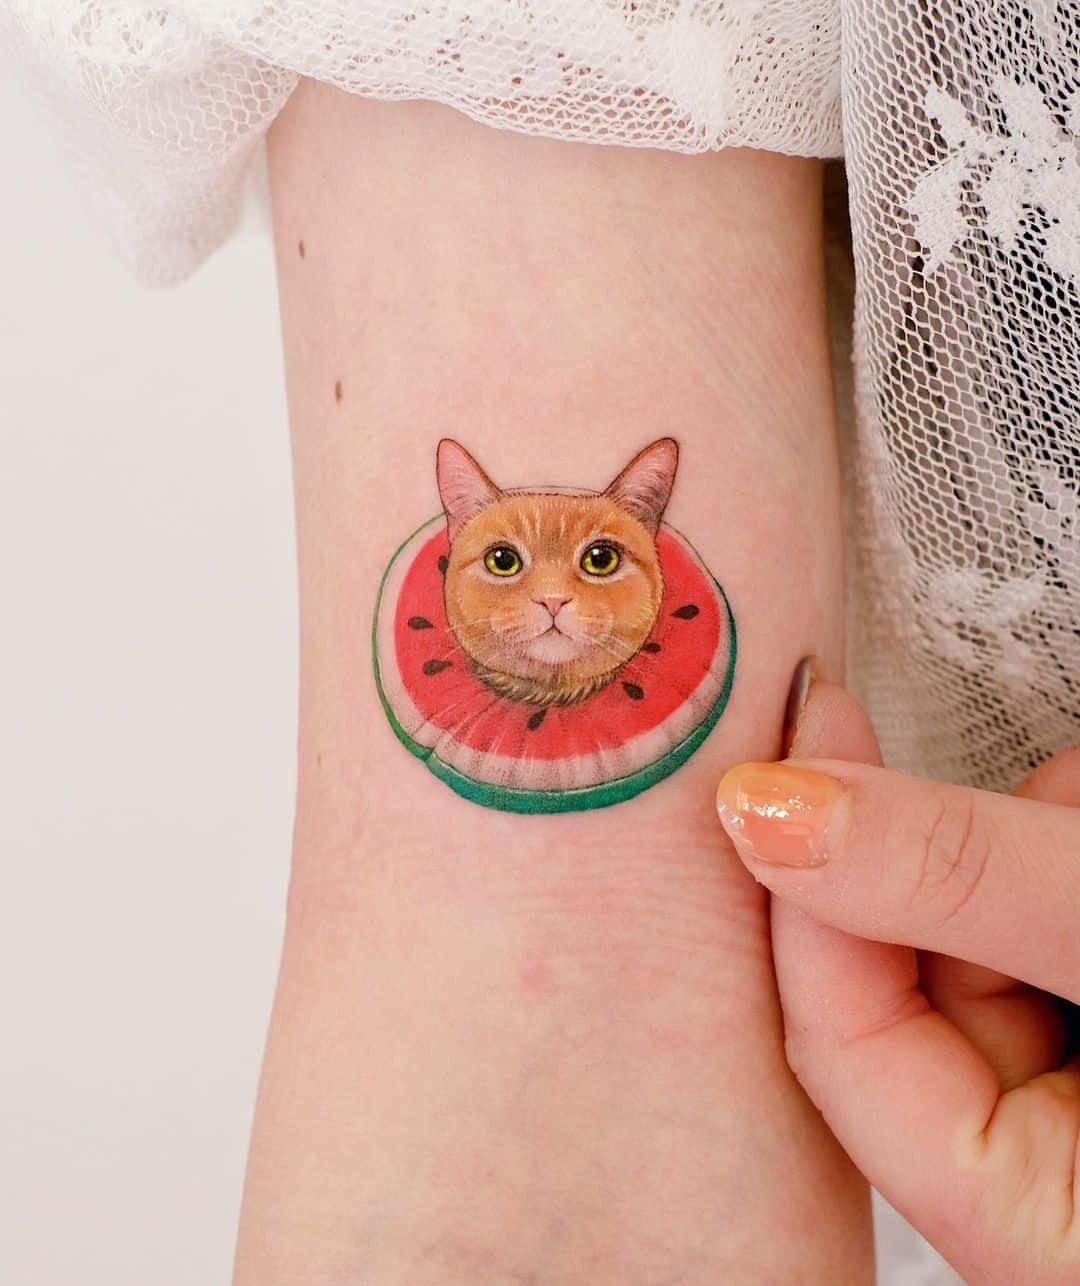 Cat and watermelon tattoo by paw.tattoo